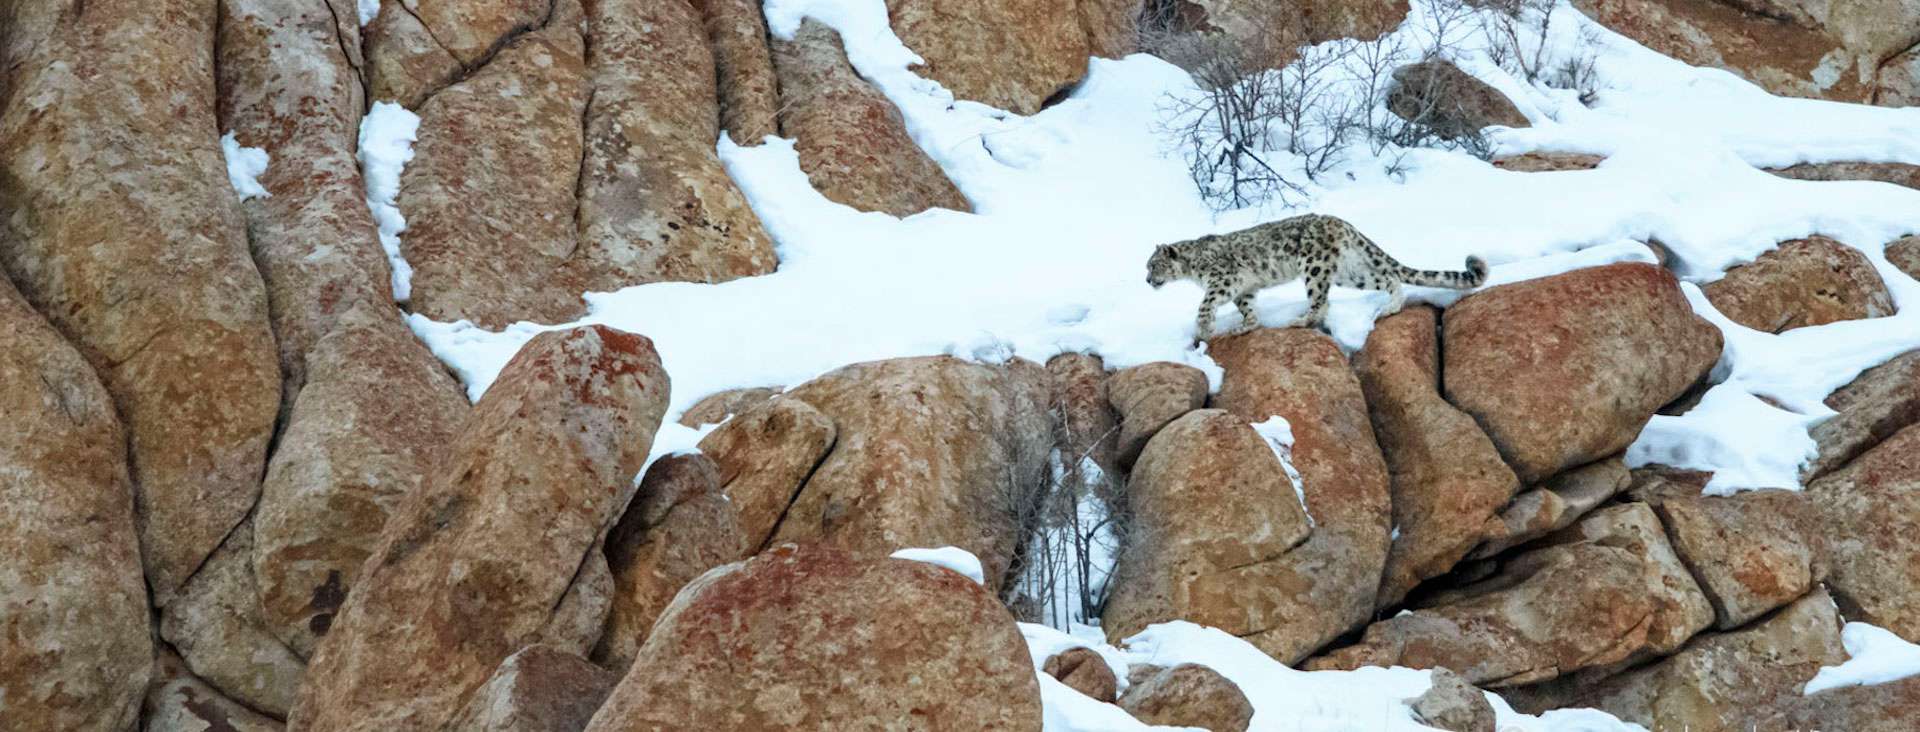 Snow Leopard by Nick Garbutt